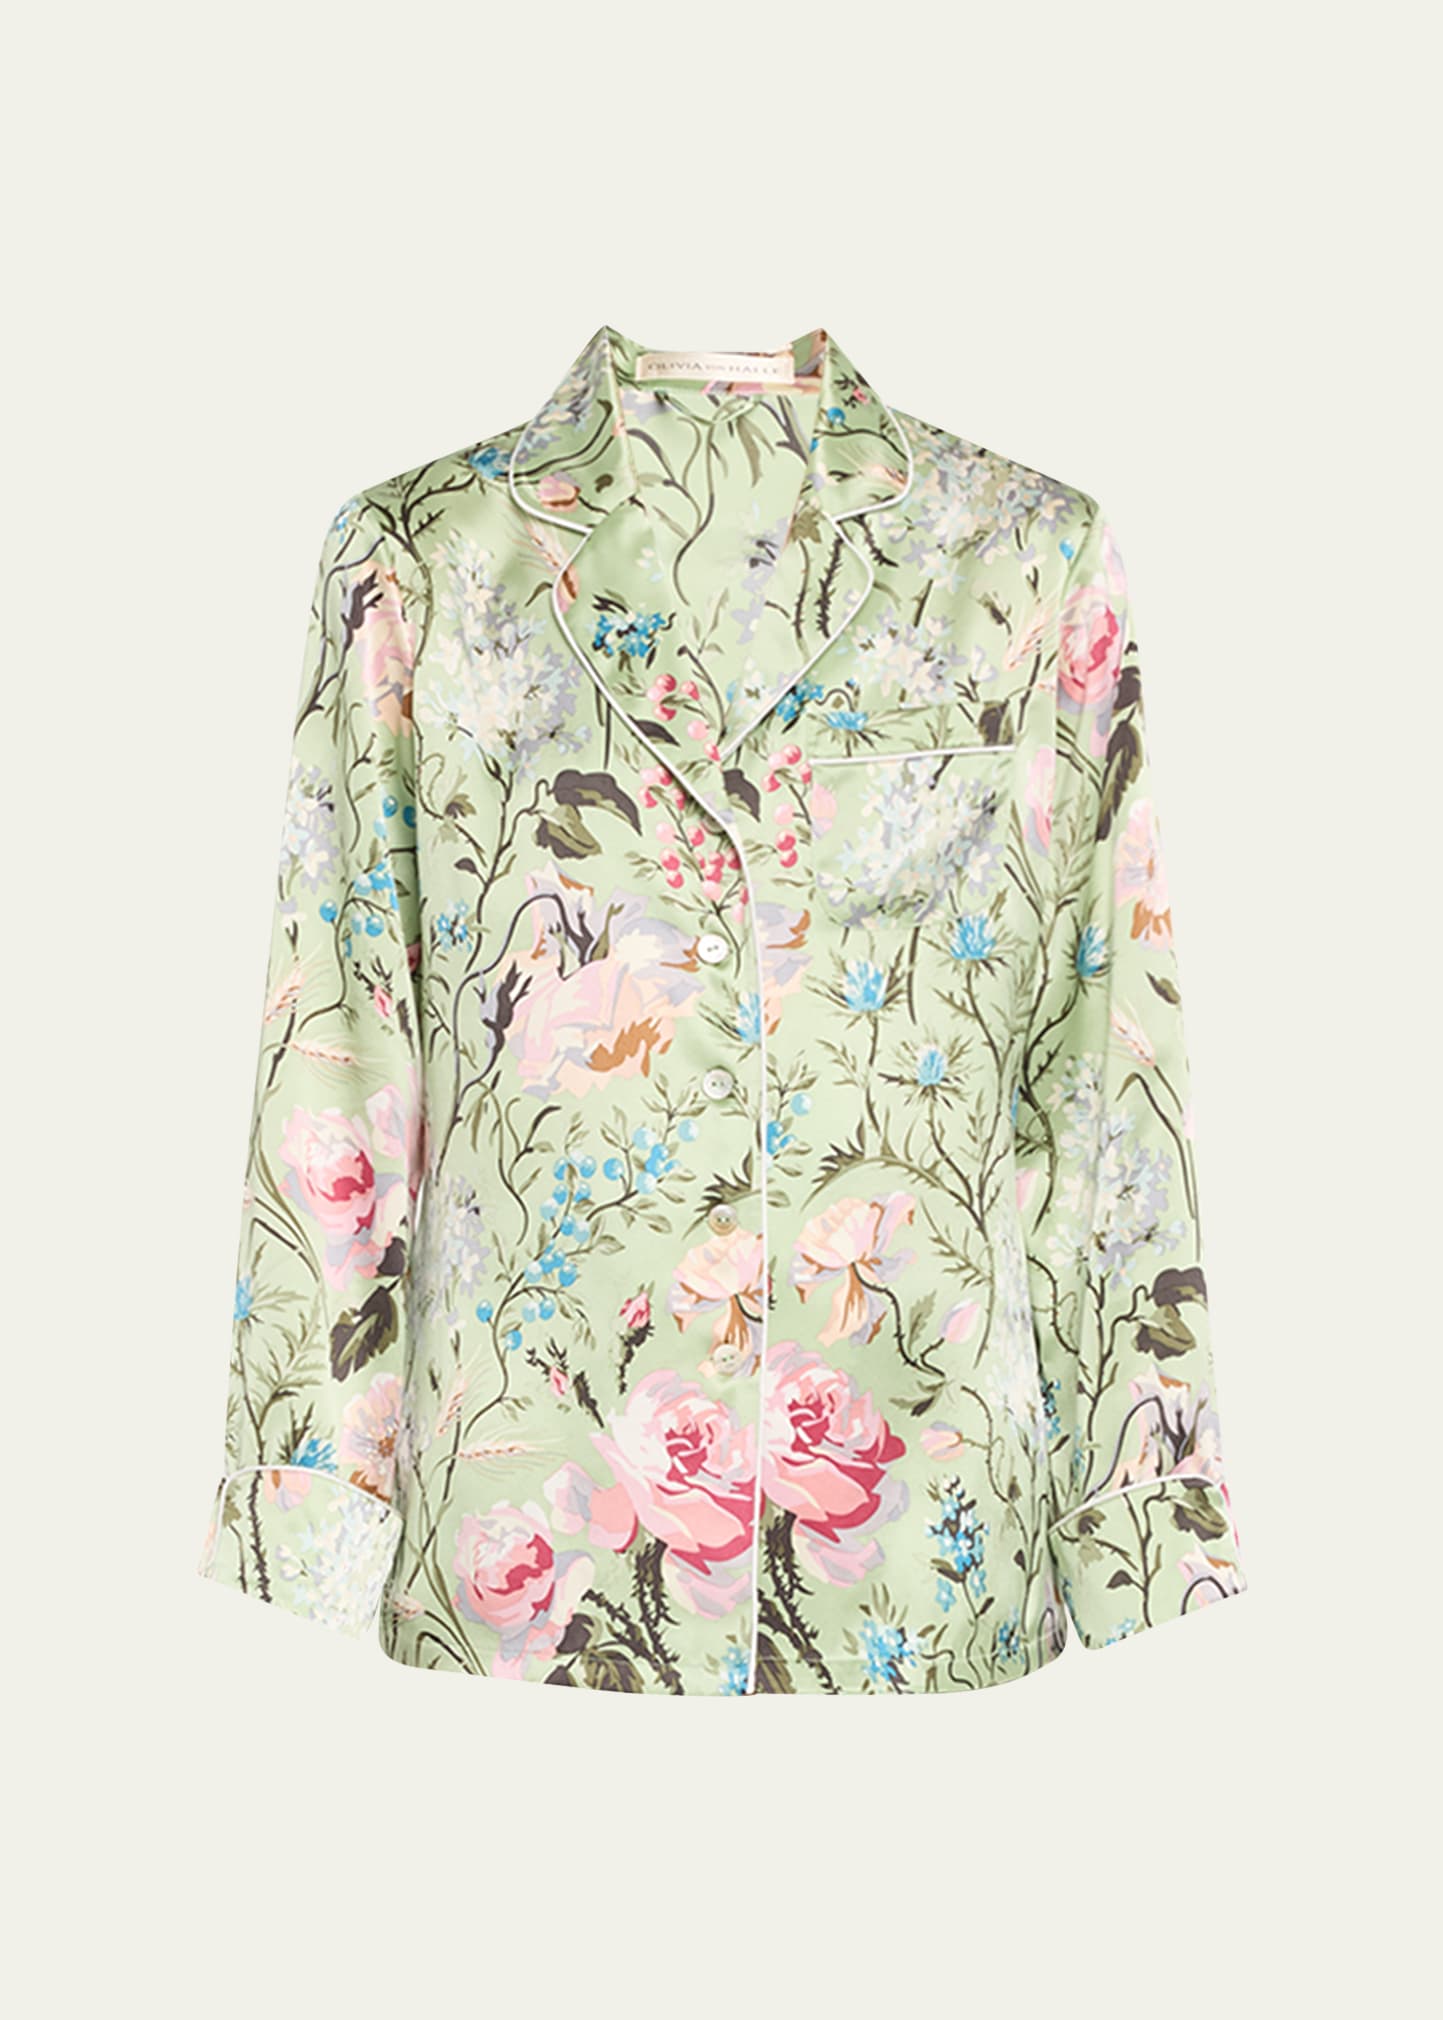 Lila Floral-Print Silk Pajama Set